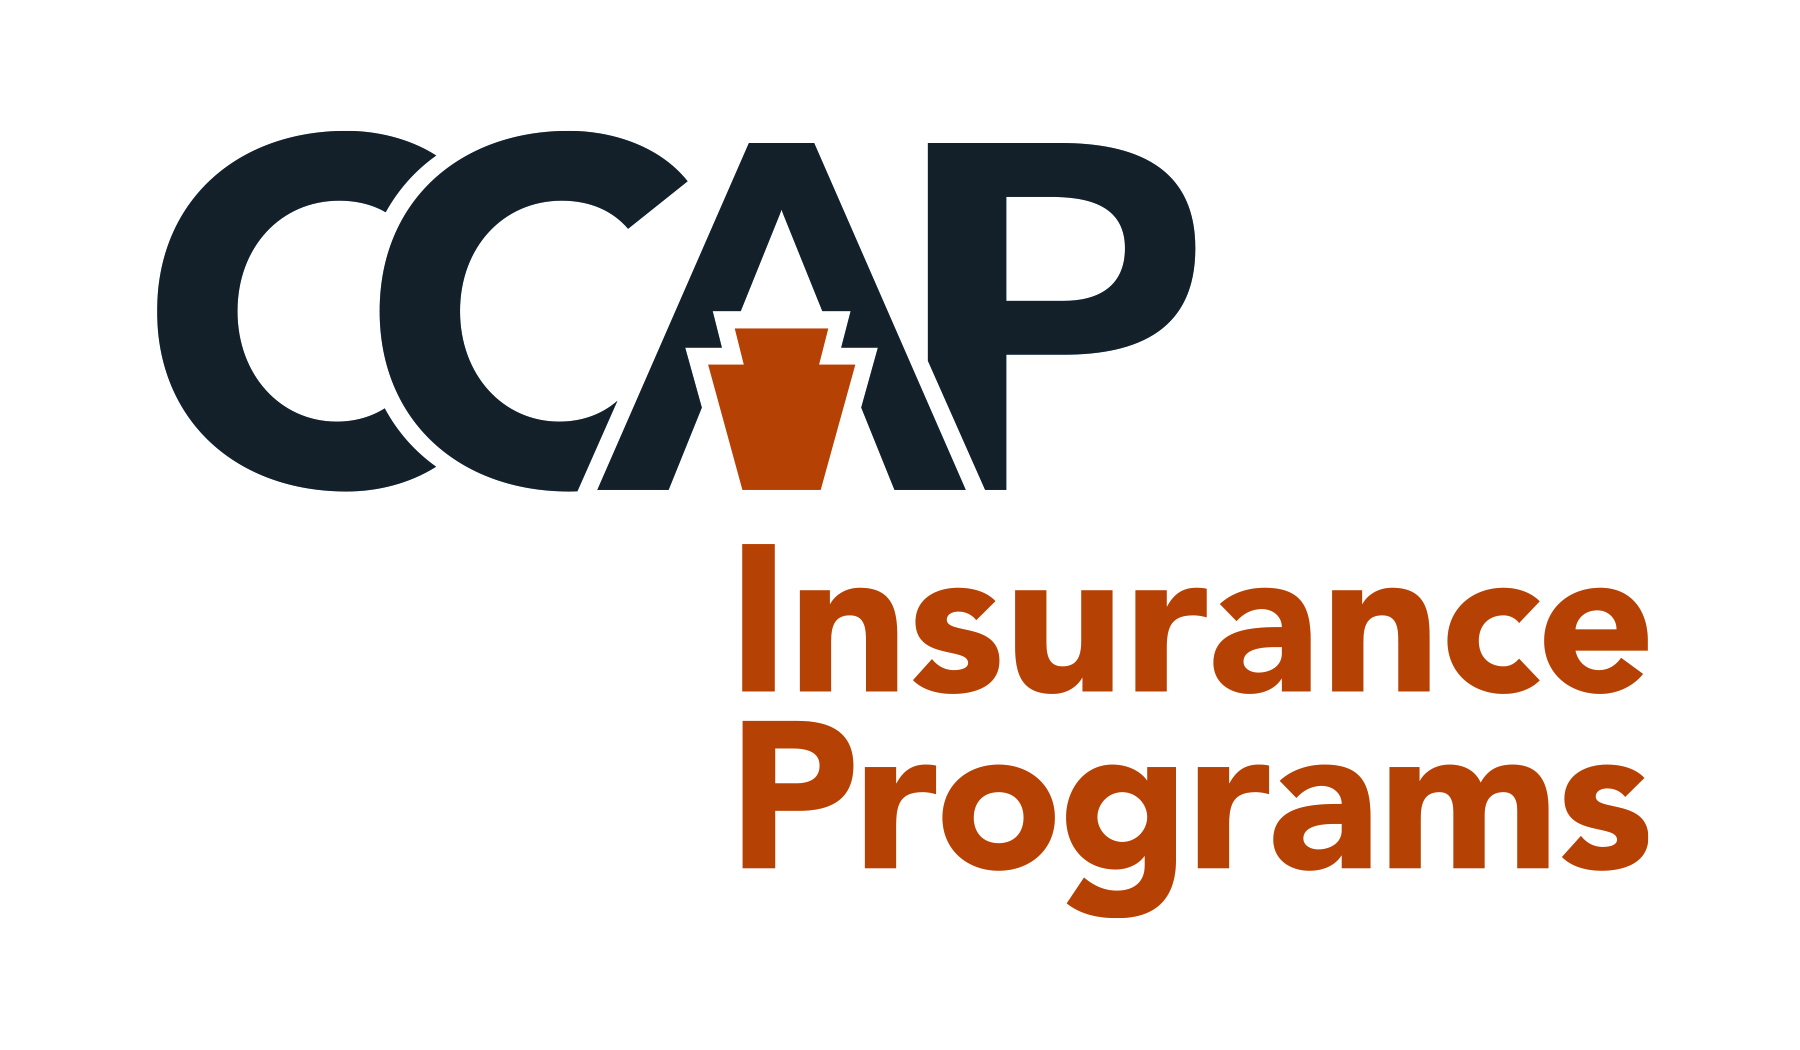 CCAP Insurance Programs logo